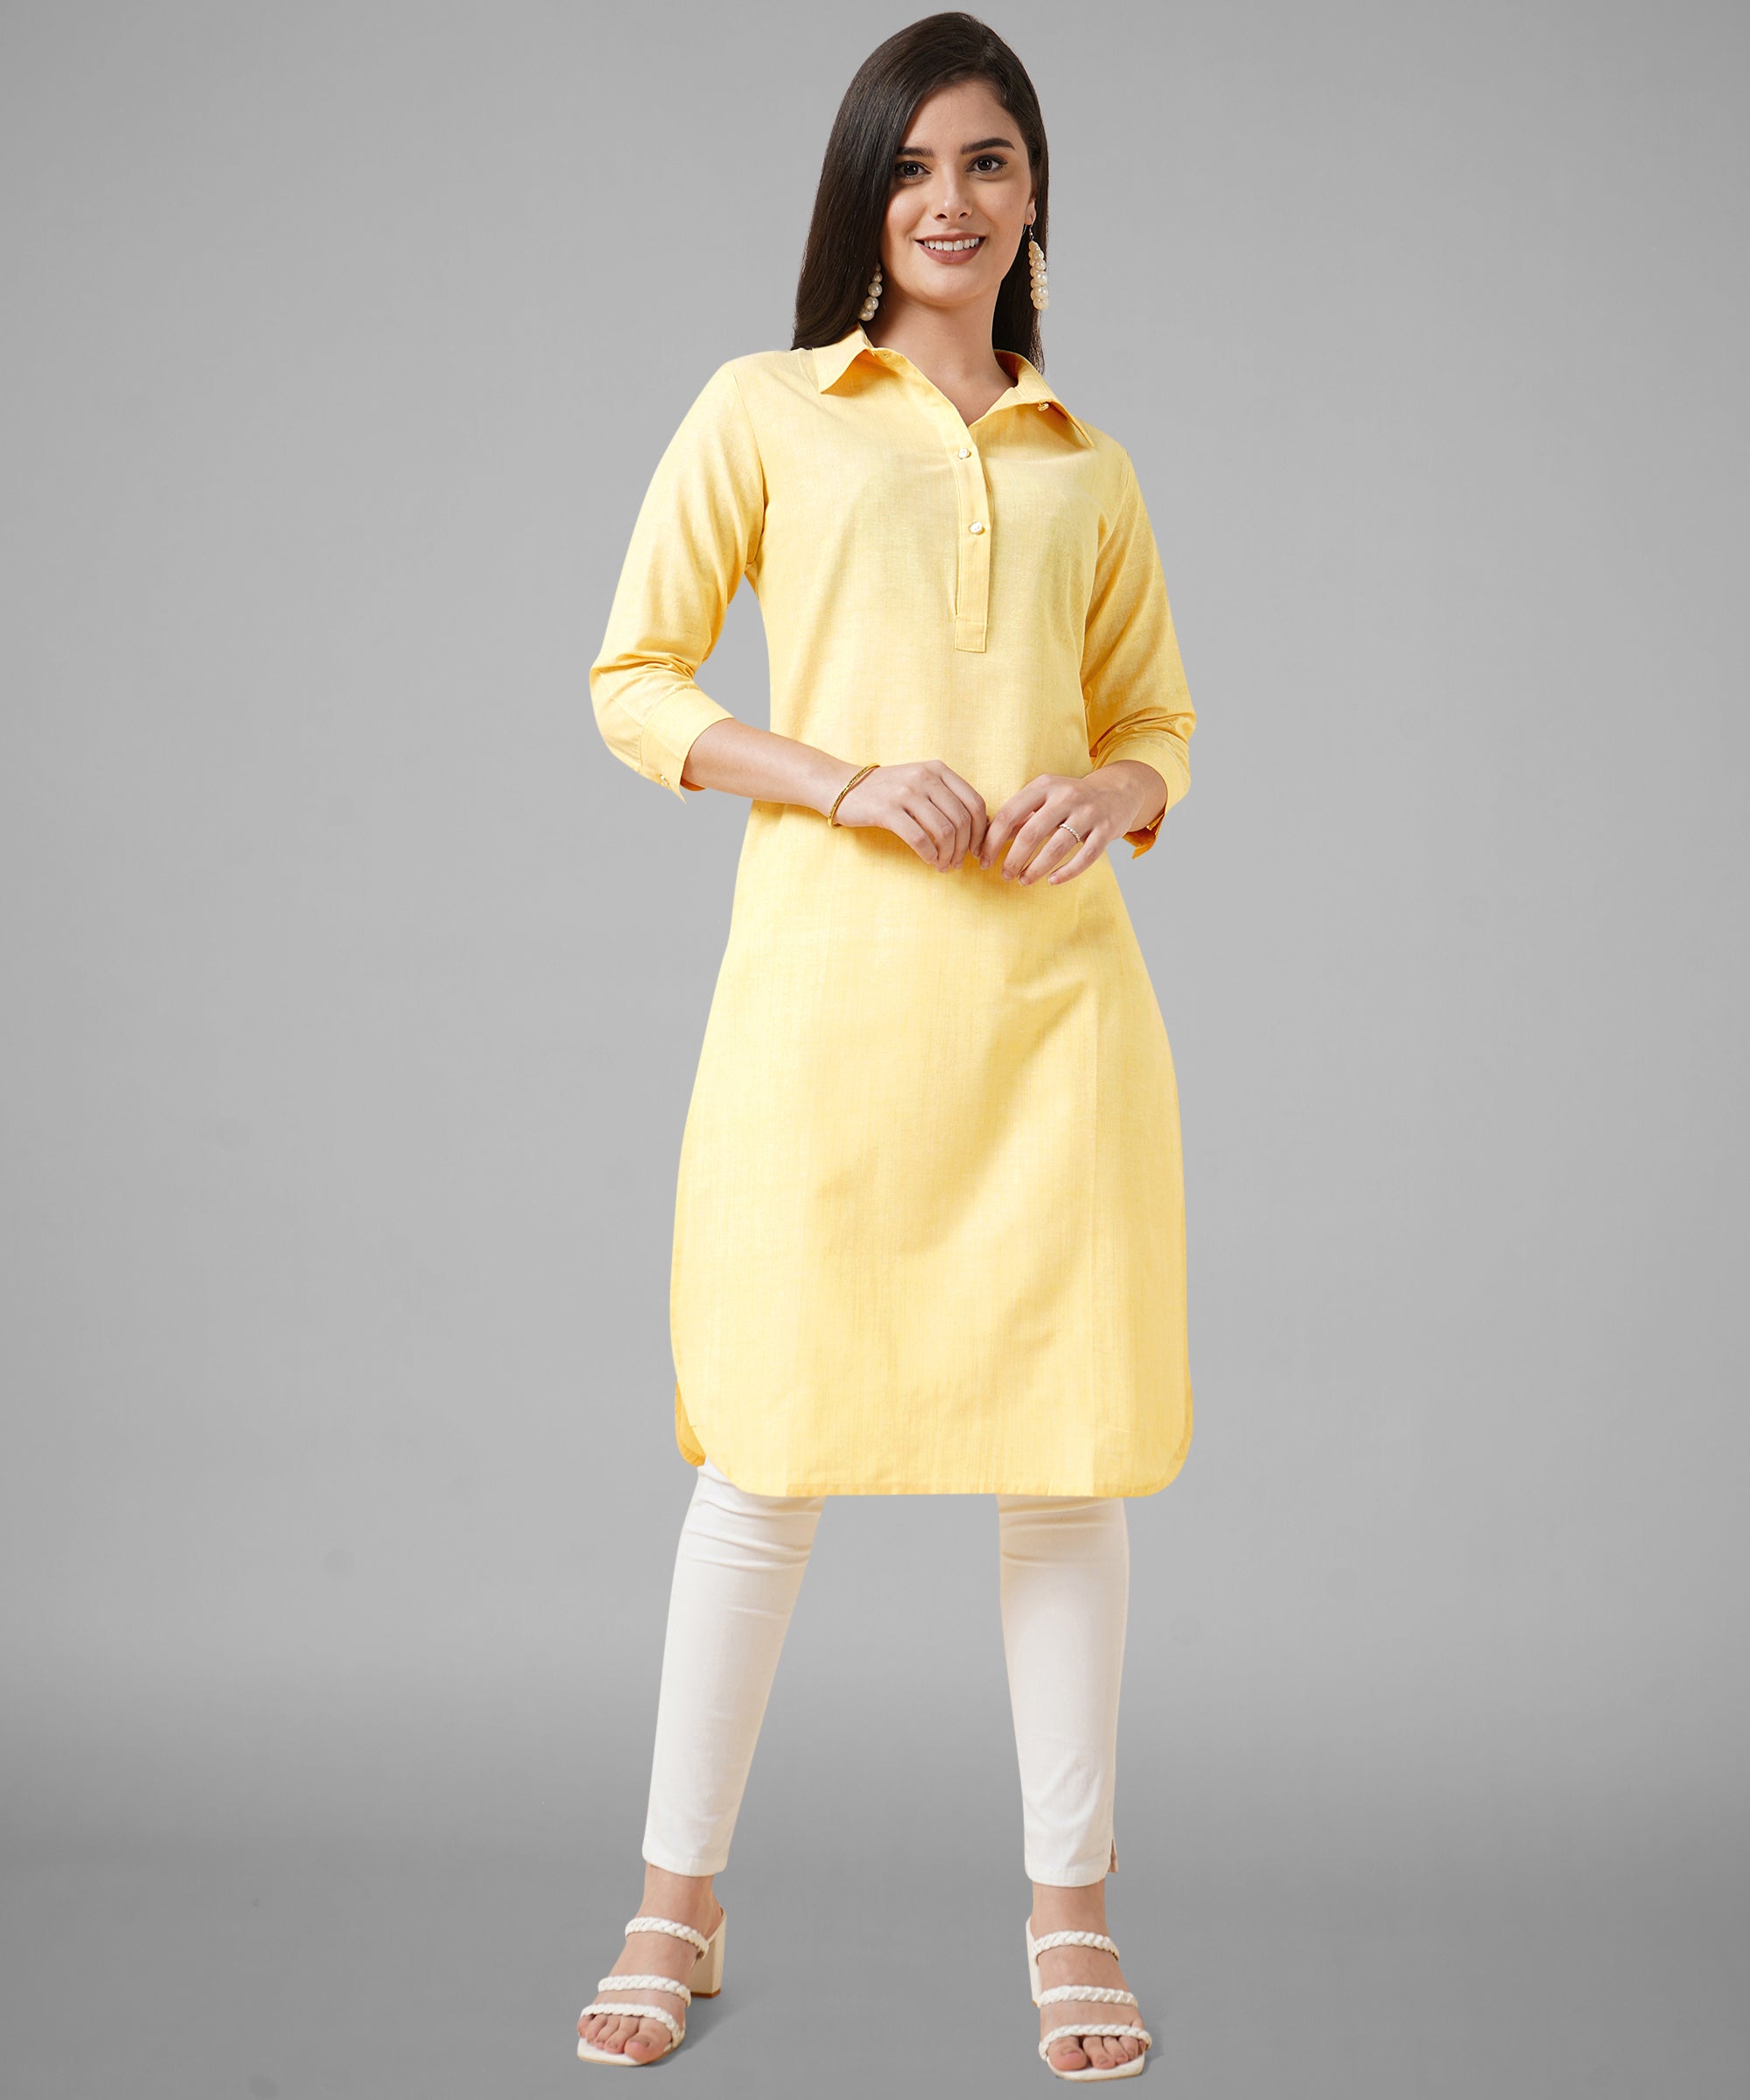 Buy SATRAT Women's Knee Length Cotton Chinese Collar Kurti (Neon  Green_L_42) at Amazon.in